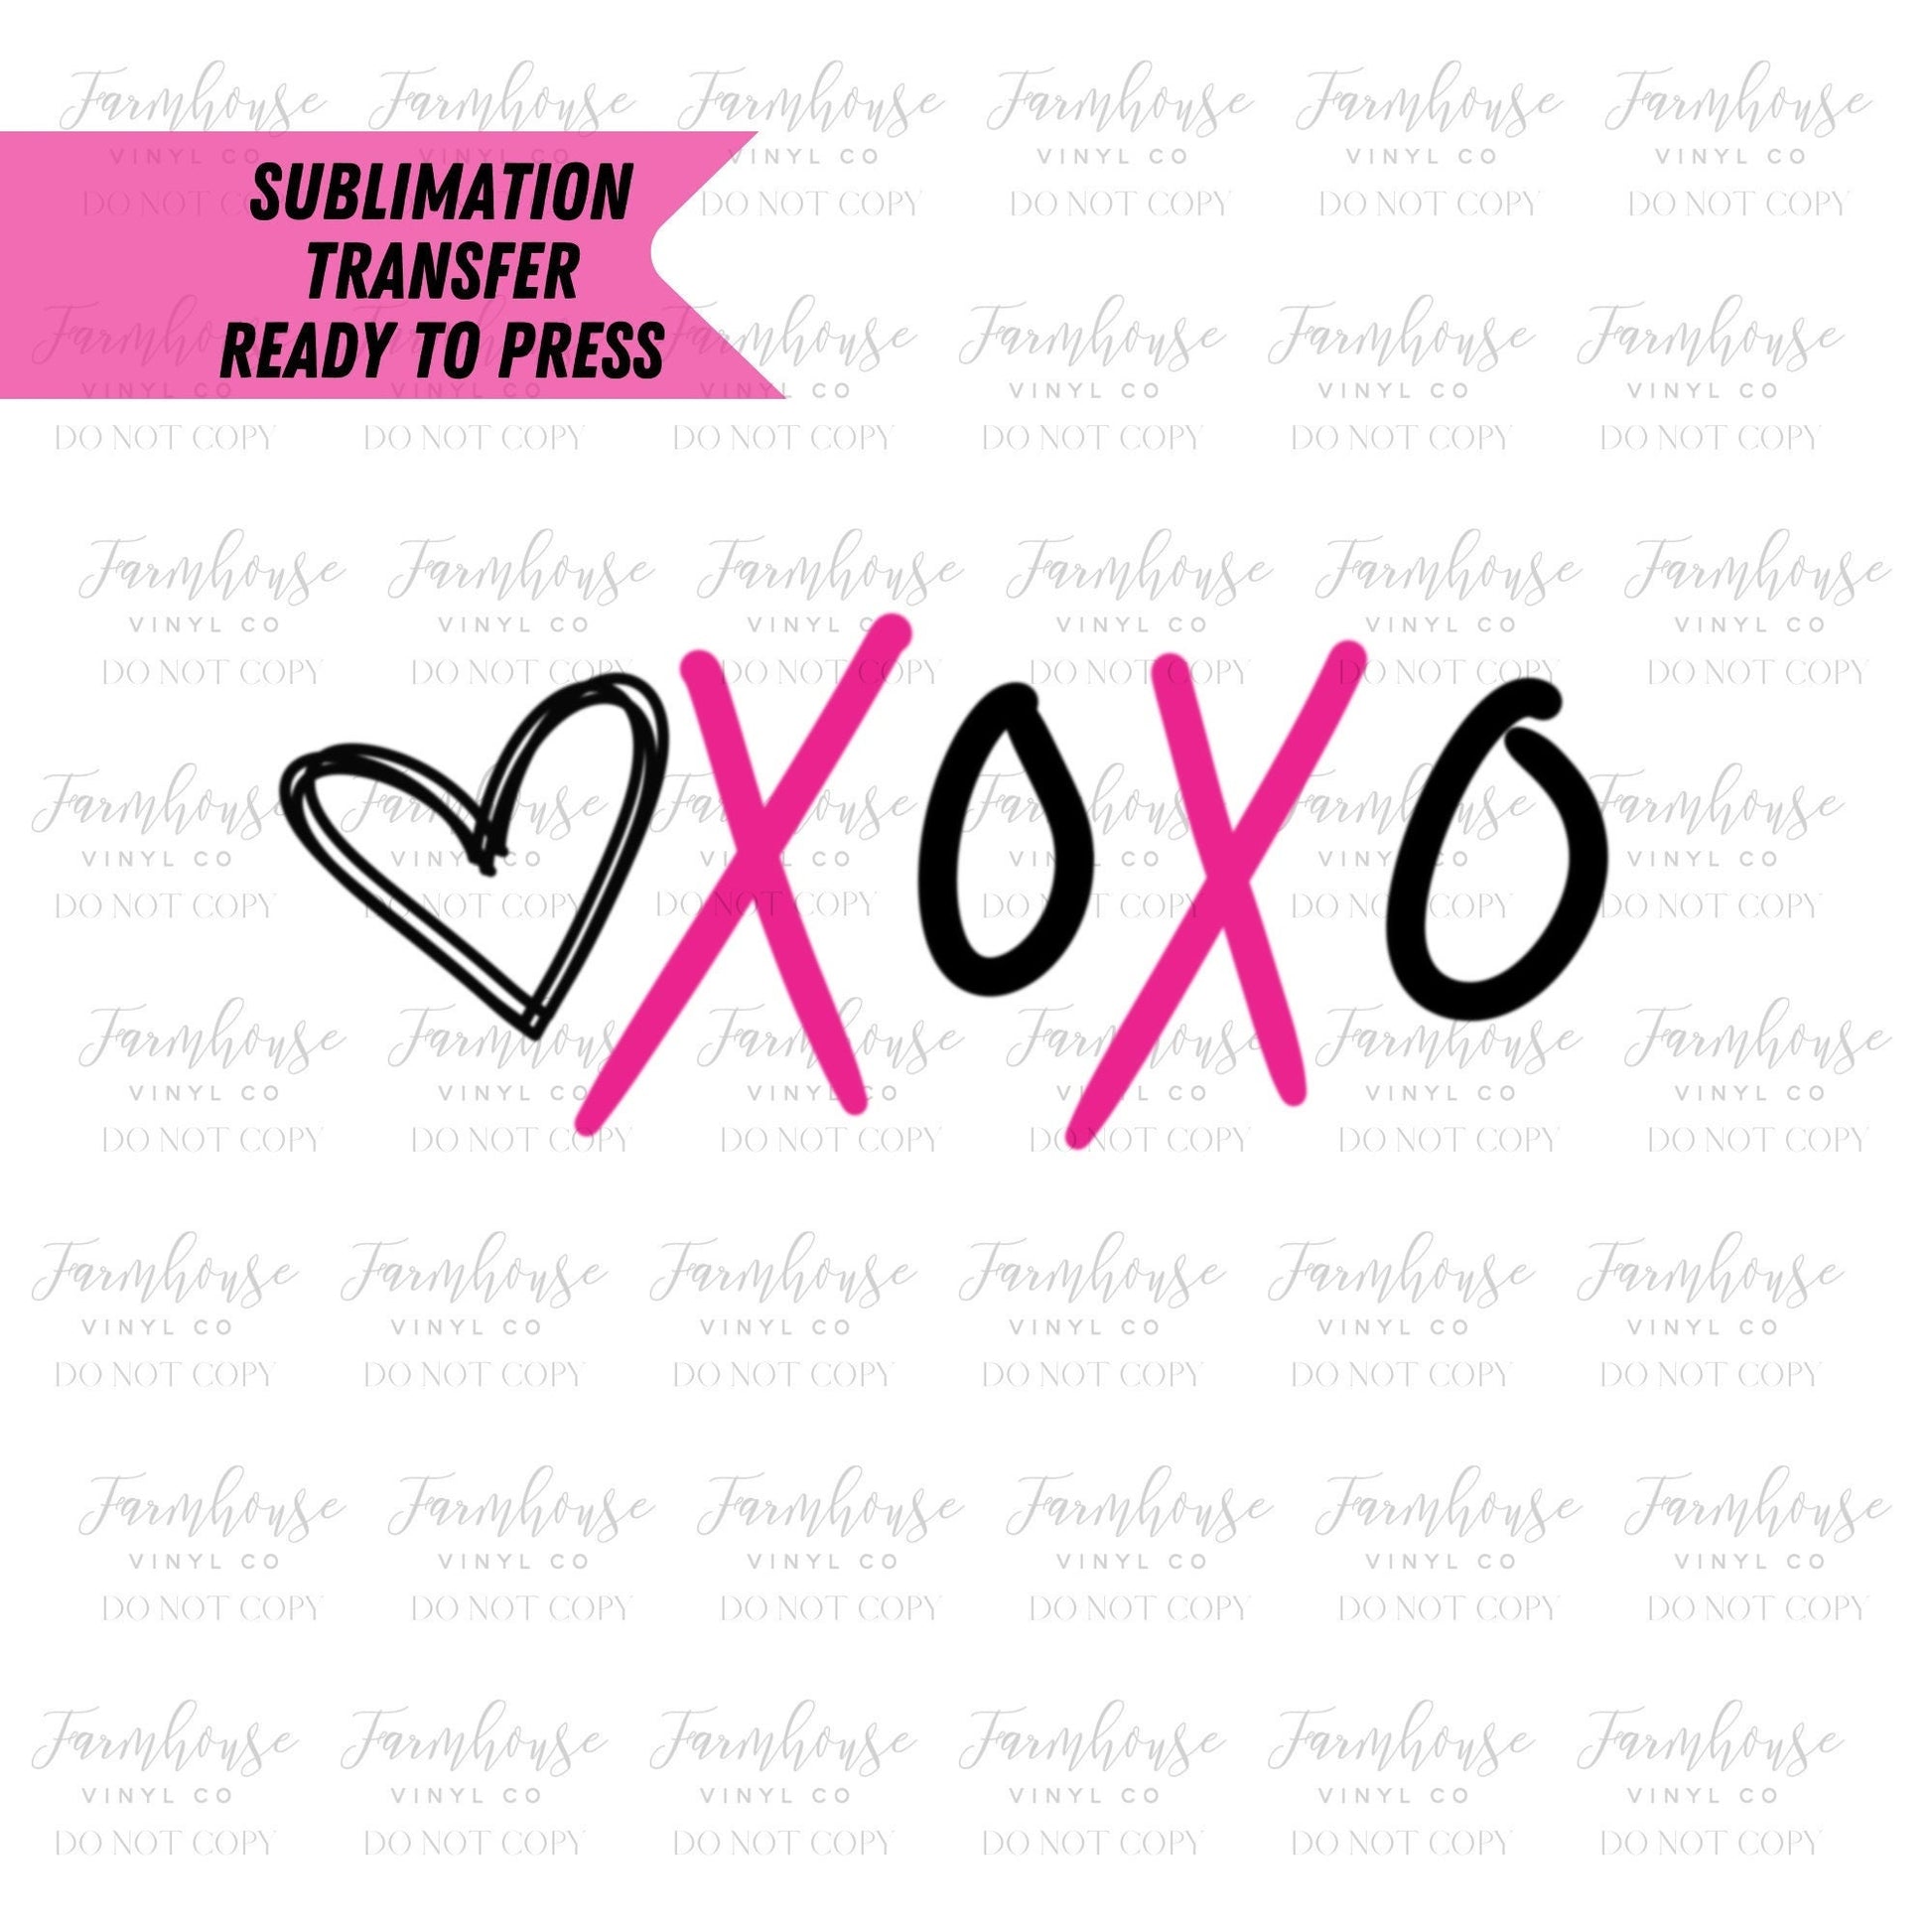 XOXO Heart Love, Ready To Press, Sublimation Transfers, DIY Shirt, Sublimation, Transfer Ready To Press, Valentine Heat Transfer Design - Farmhouse Vinyl Co